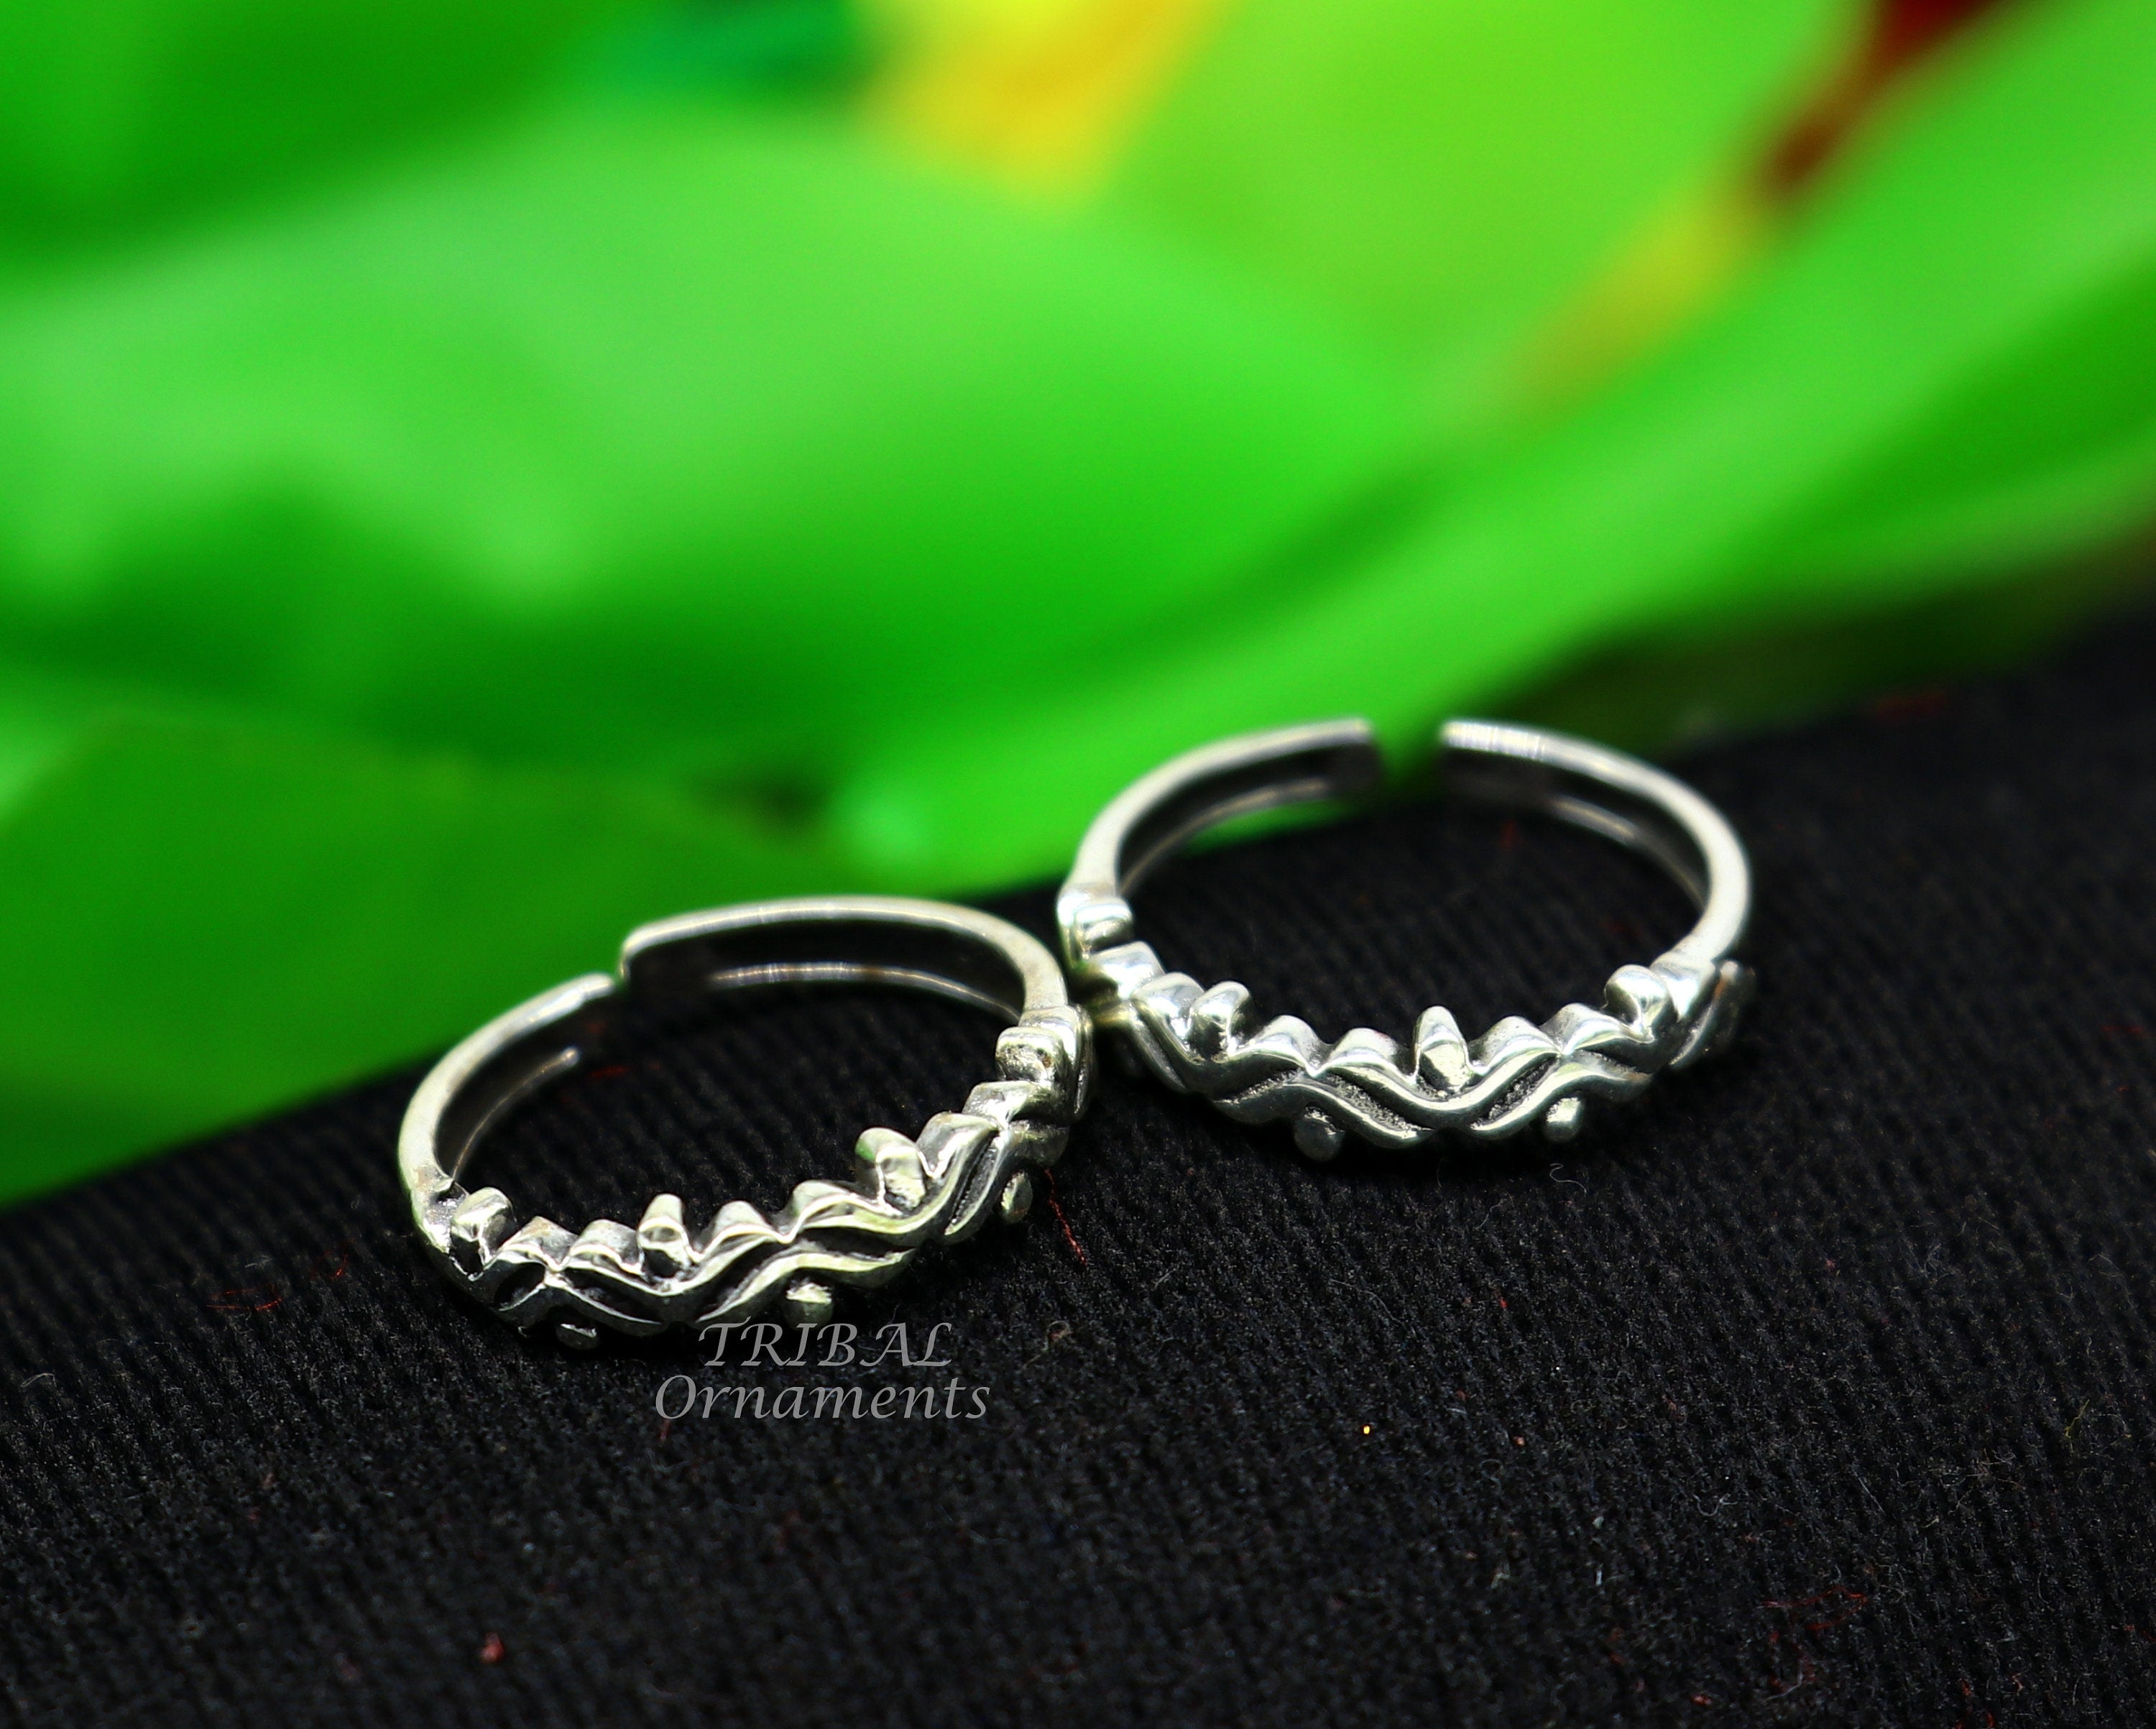 Buy CLARA 925 Sterling Silver Size Adjustable Oxidised Flower Toe Rings  Pair Online at Best Prices in India - JioMart.